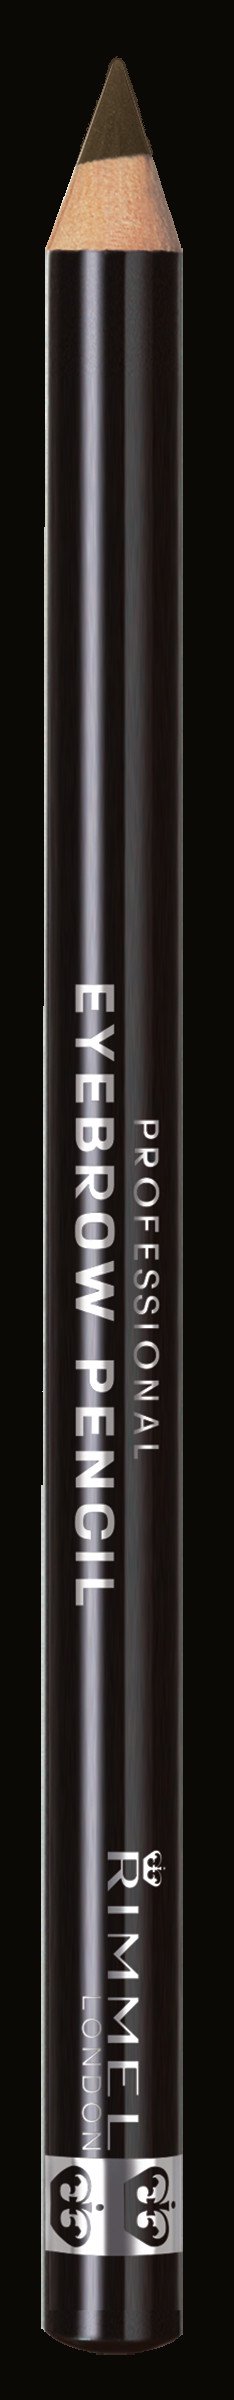 Rimmel Professional Eyebrow Pencil, Dark Brown (Best Eyebrow Pencil Color For Dark Brown Hair)